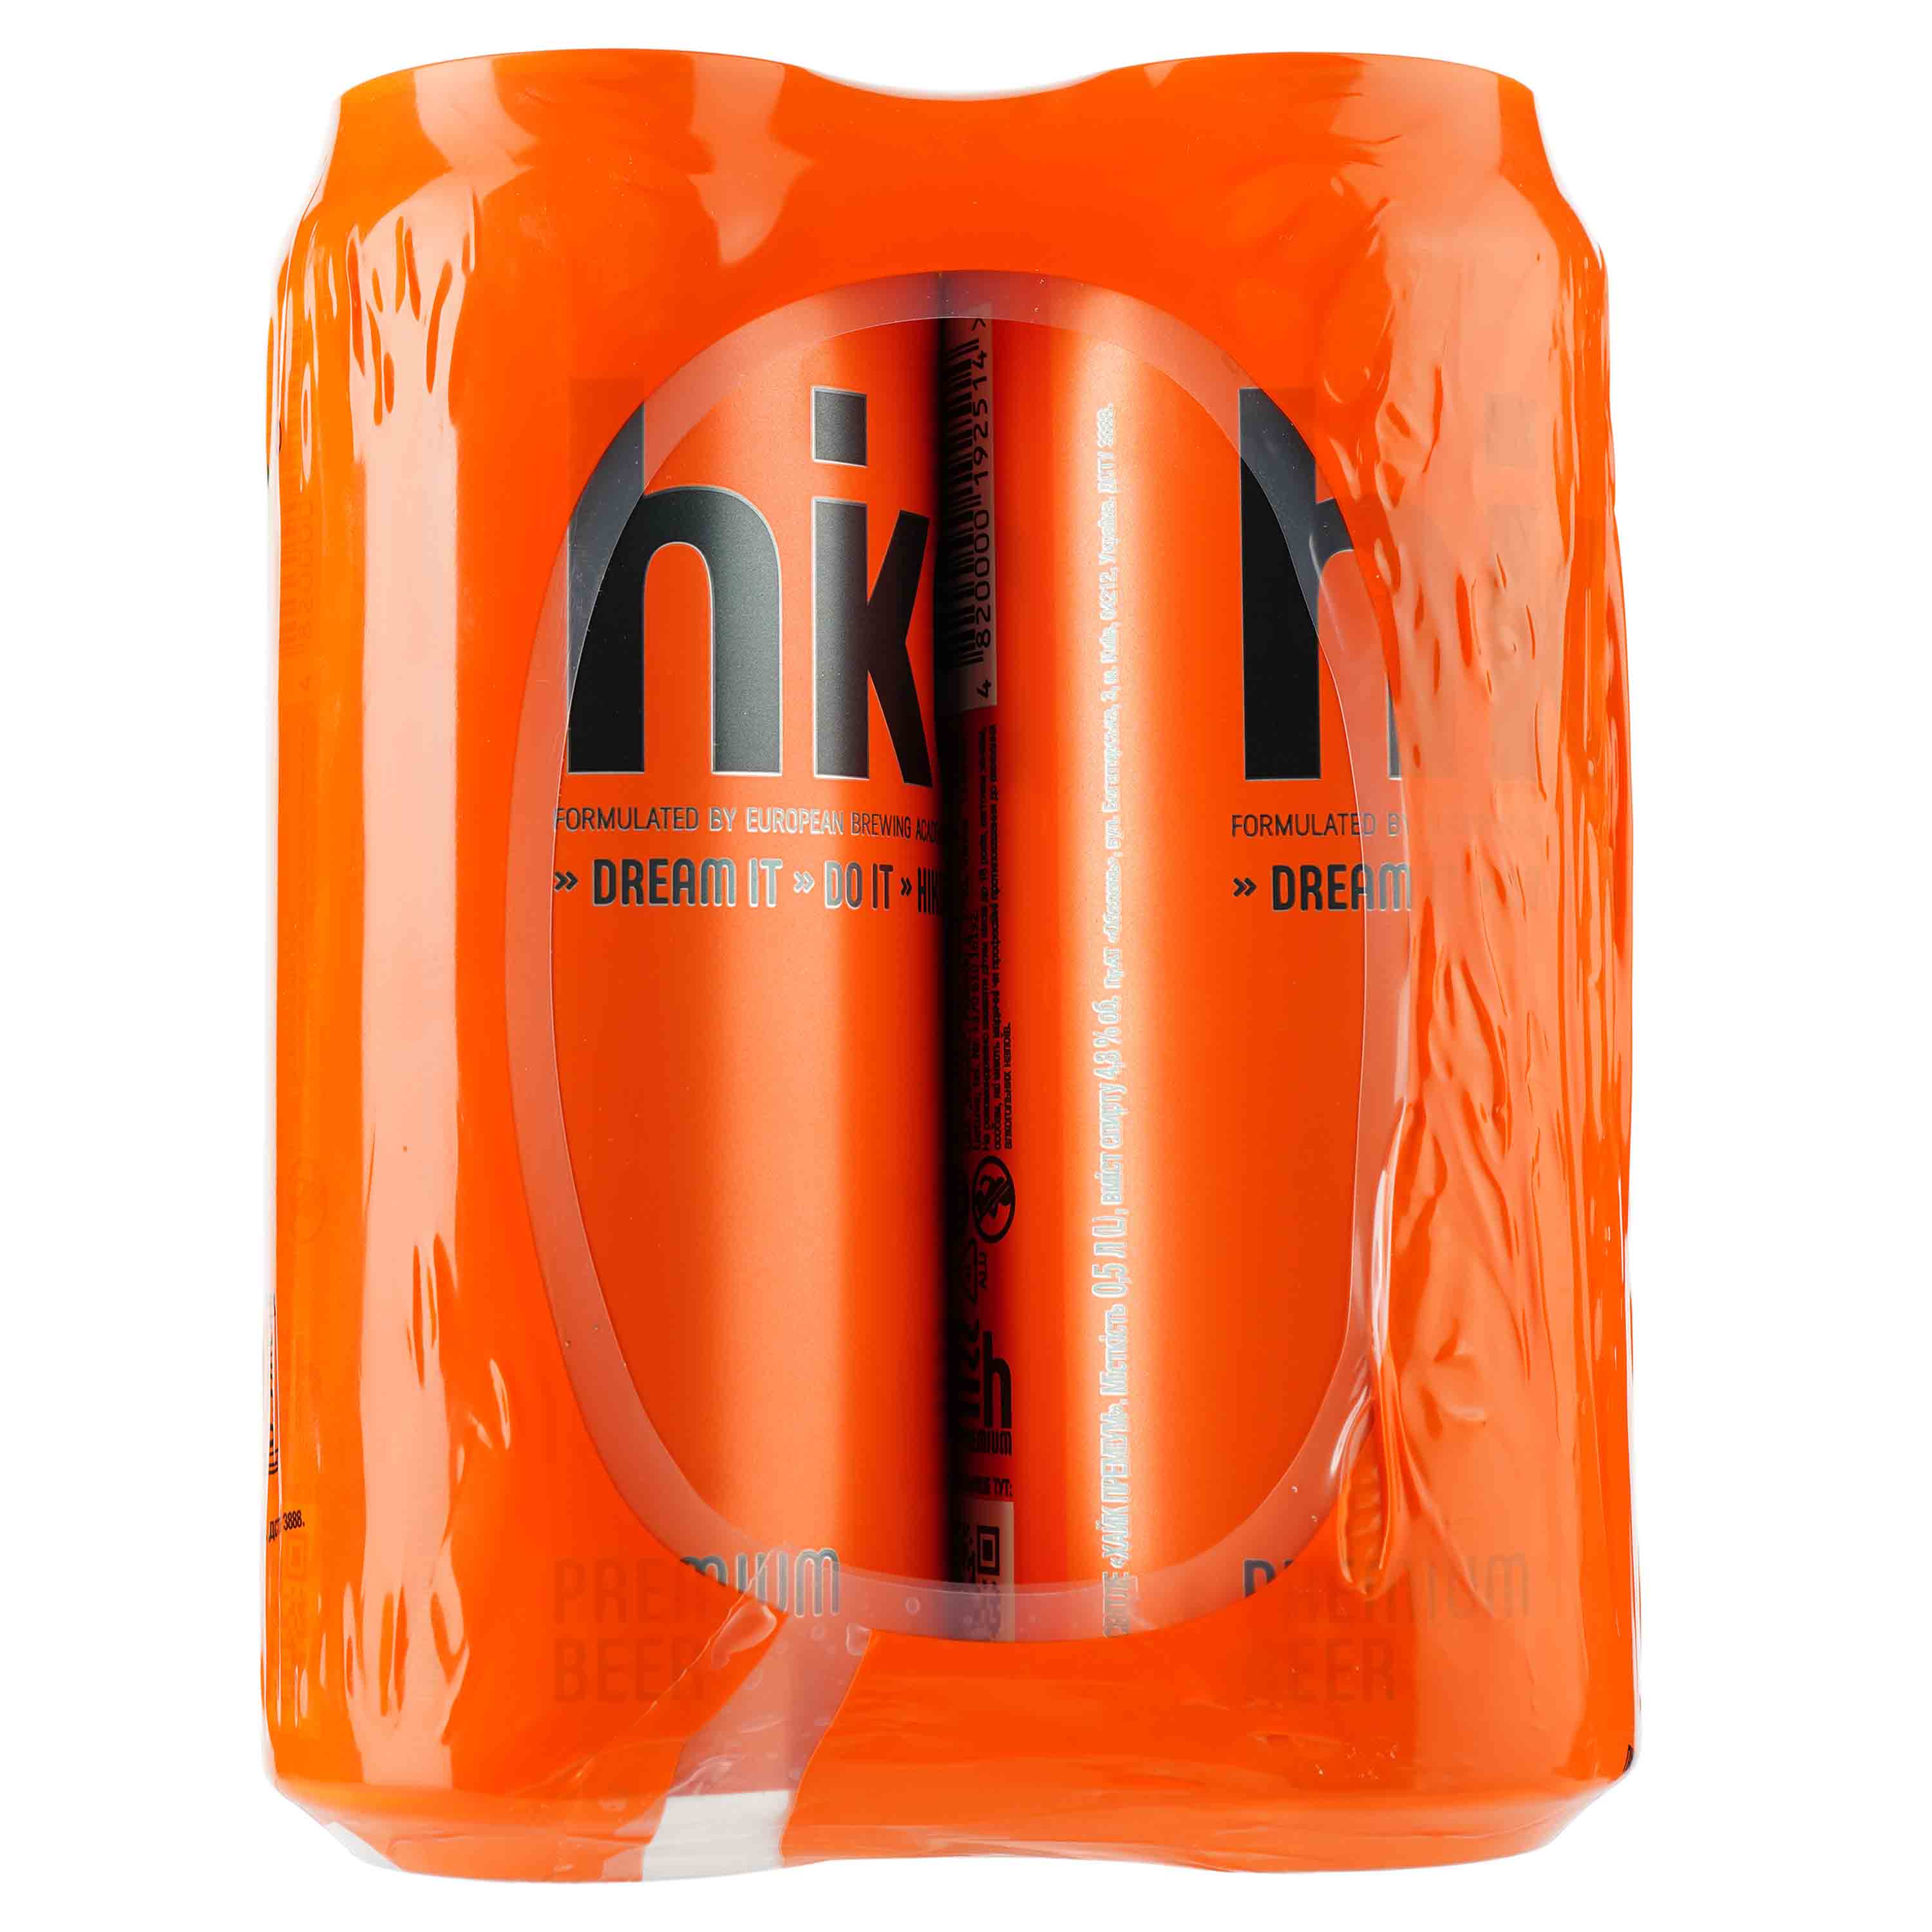 Пиво Hike Premium, світле, 4,8%, з/б, 2 л (4 шт. по 0,5 л) (840504) - фото 2